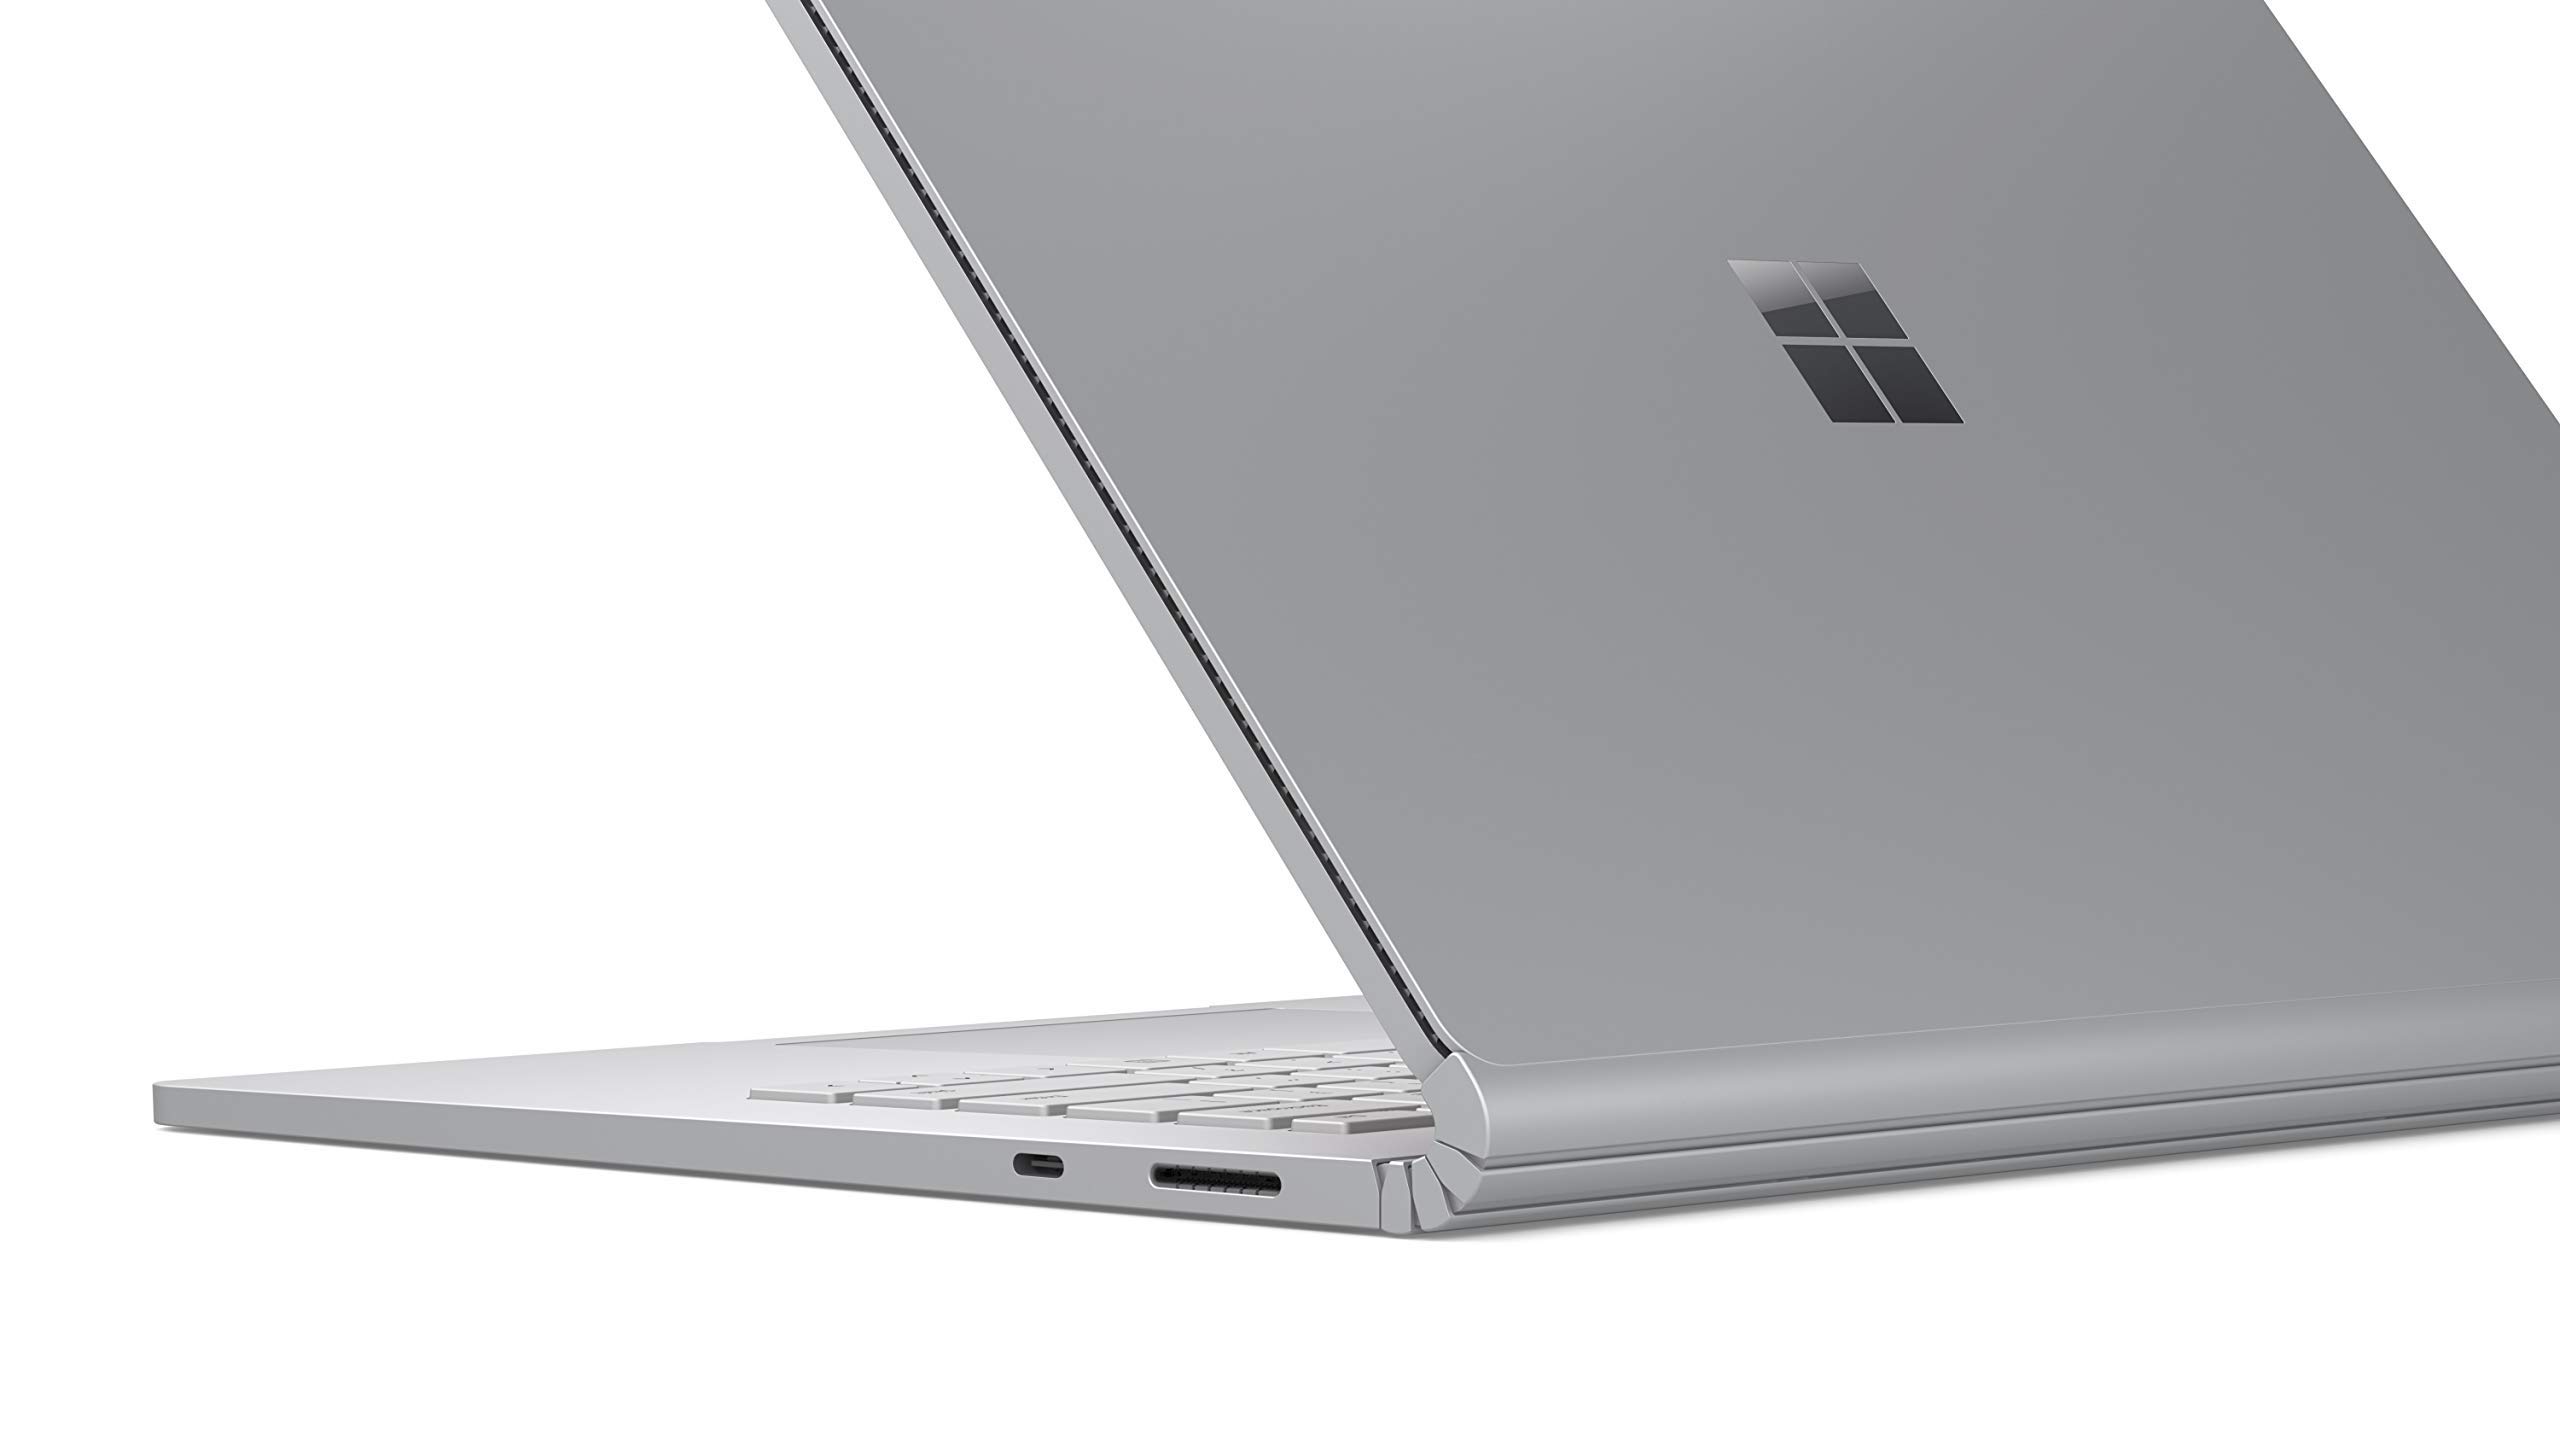 NEW Microsoft Surface Book 3 - 13.5 Touch-Screen - 10th Gen Intel Core i7 - 16GB Memory - 256GB SSD (Latest Model) - Platinum (Renewed)